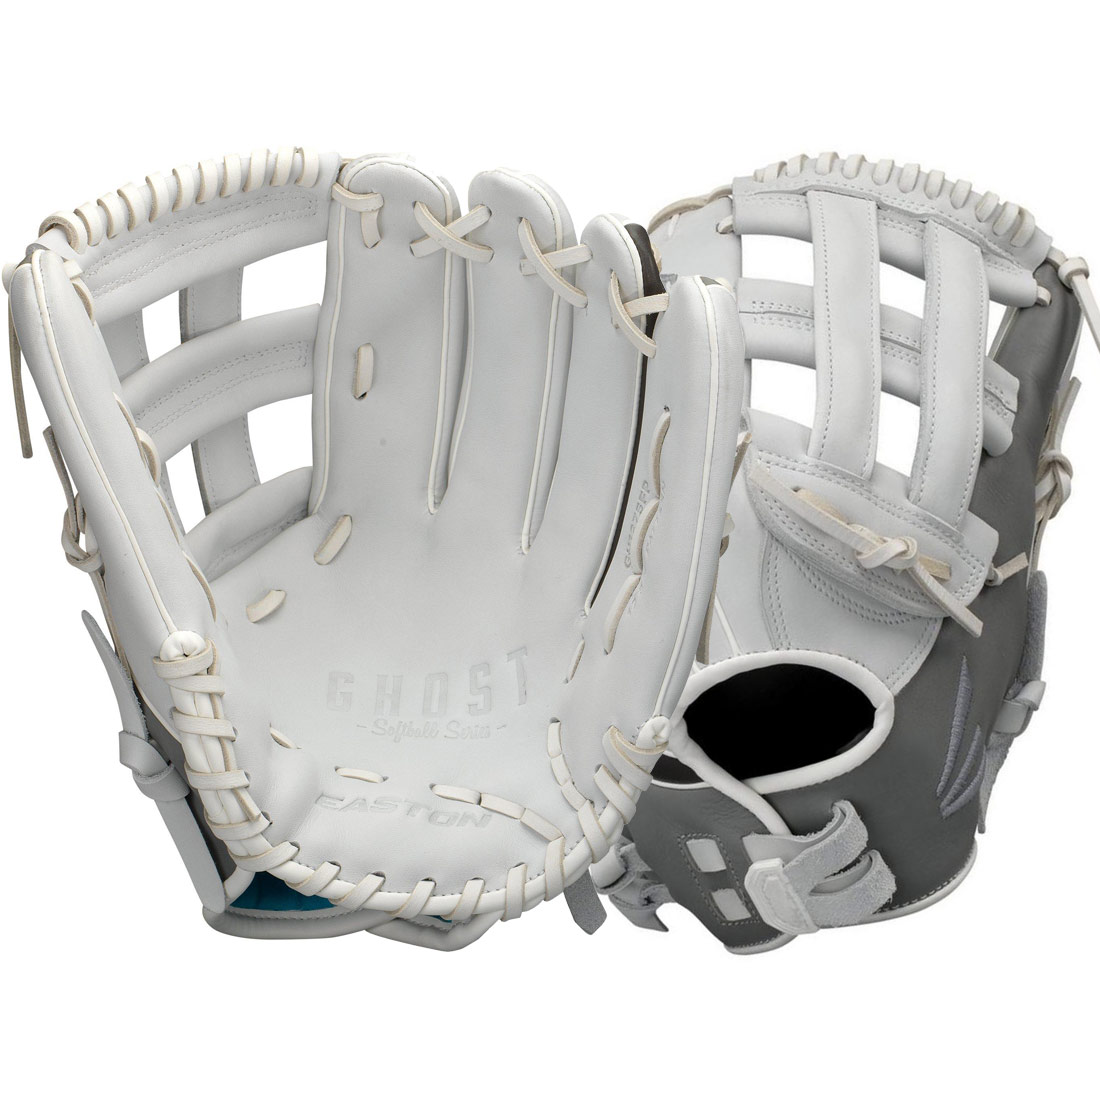 Easton Ghost Fastpitch Softball Glove 12.75\" GH1276FP